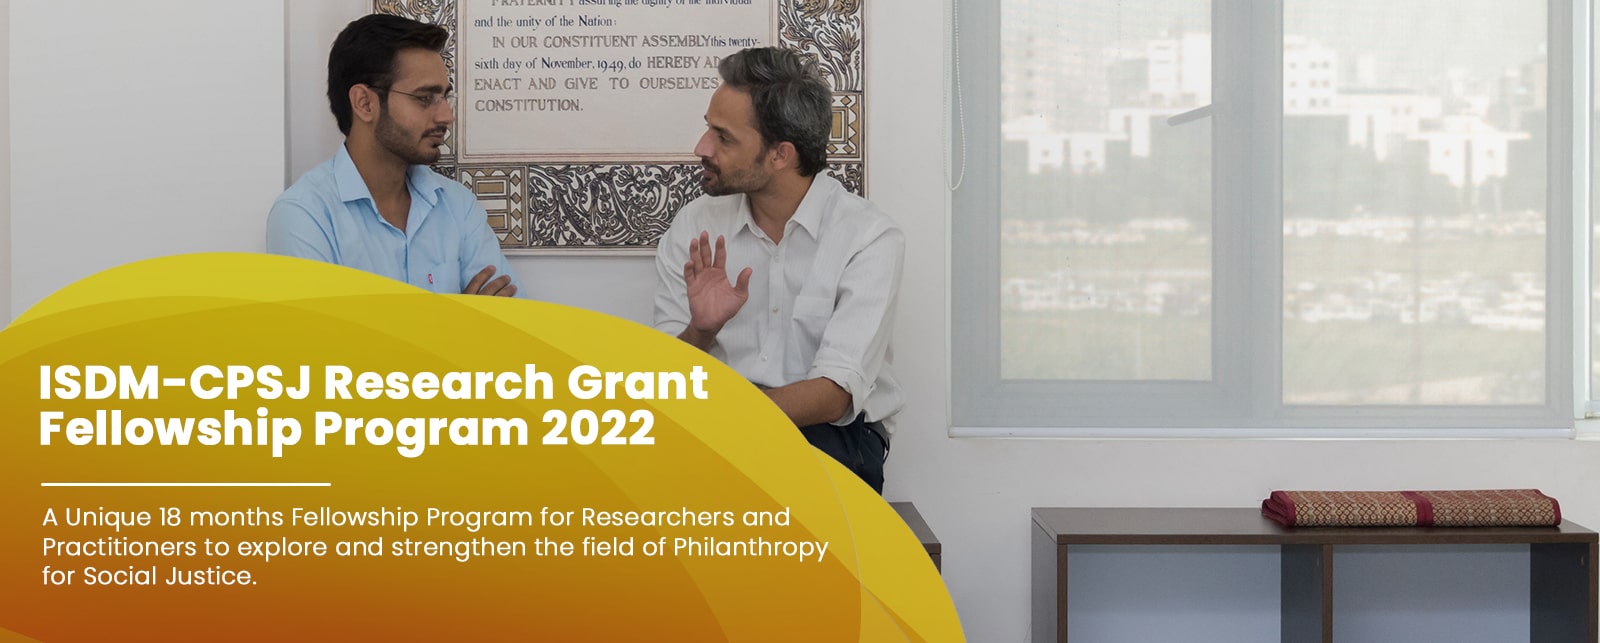 ISDM-CPSJ Research Grant Fellowship Program 2022